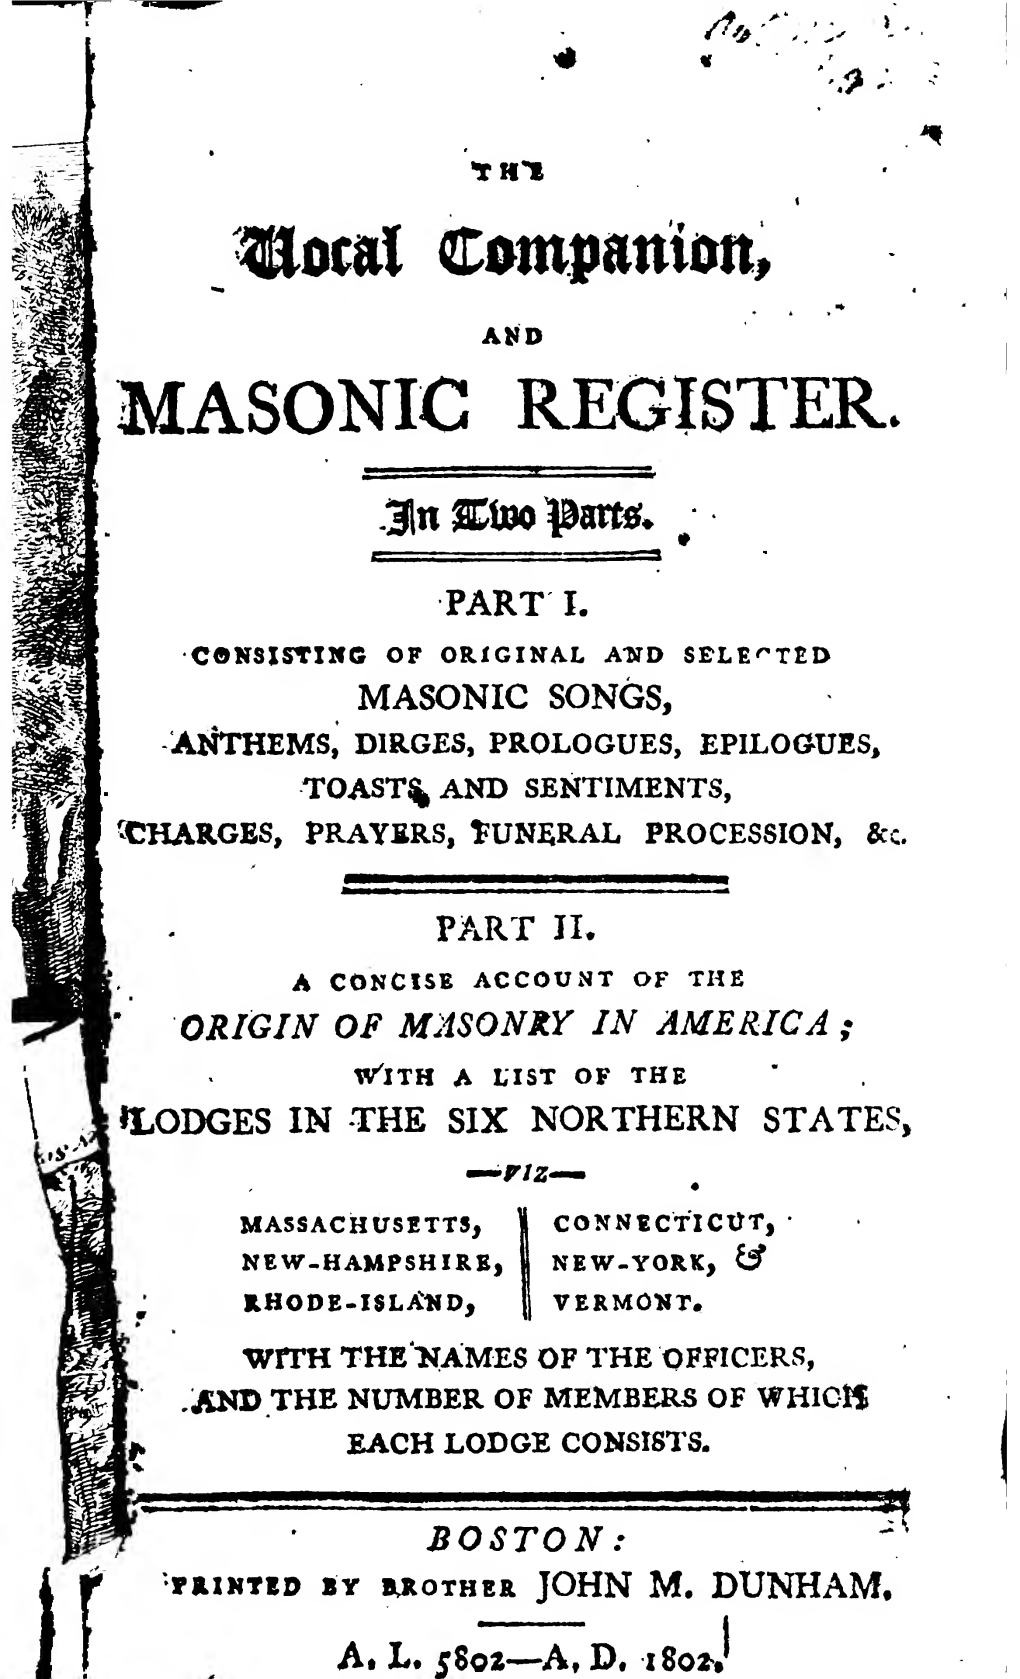 The Vocal Companion and Masonic Register 1802